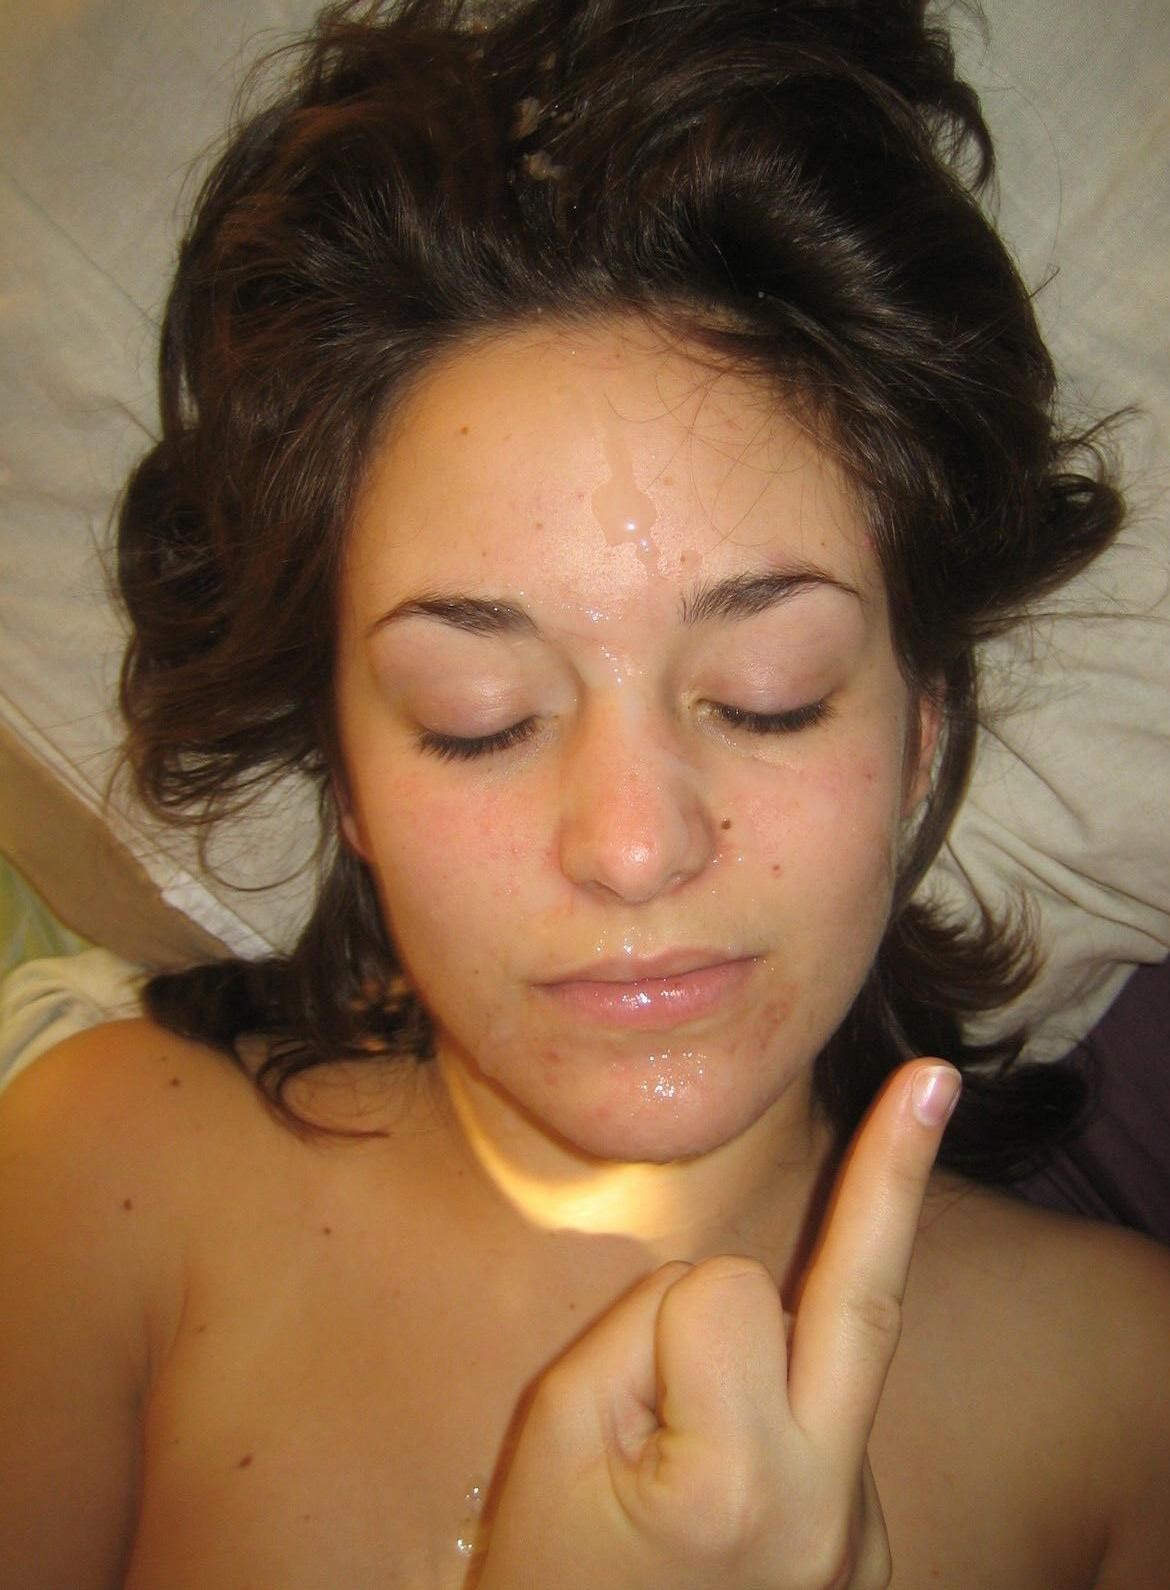 Middle finger facial cumshot (36 pictures) picture